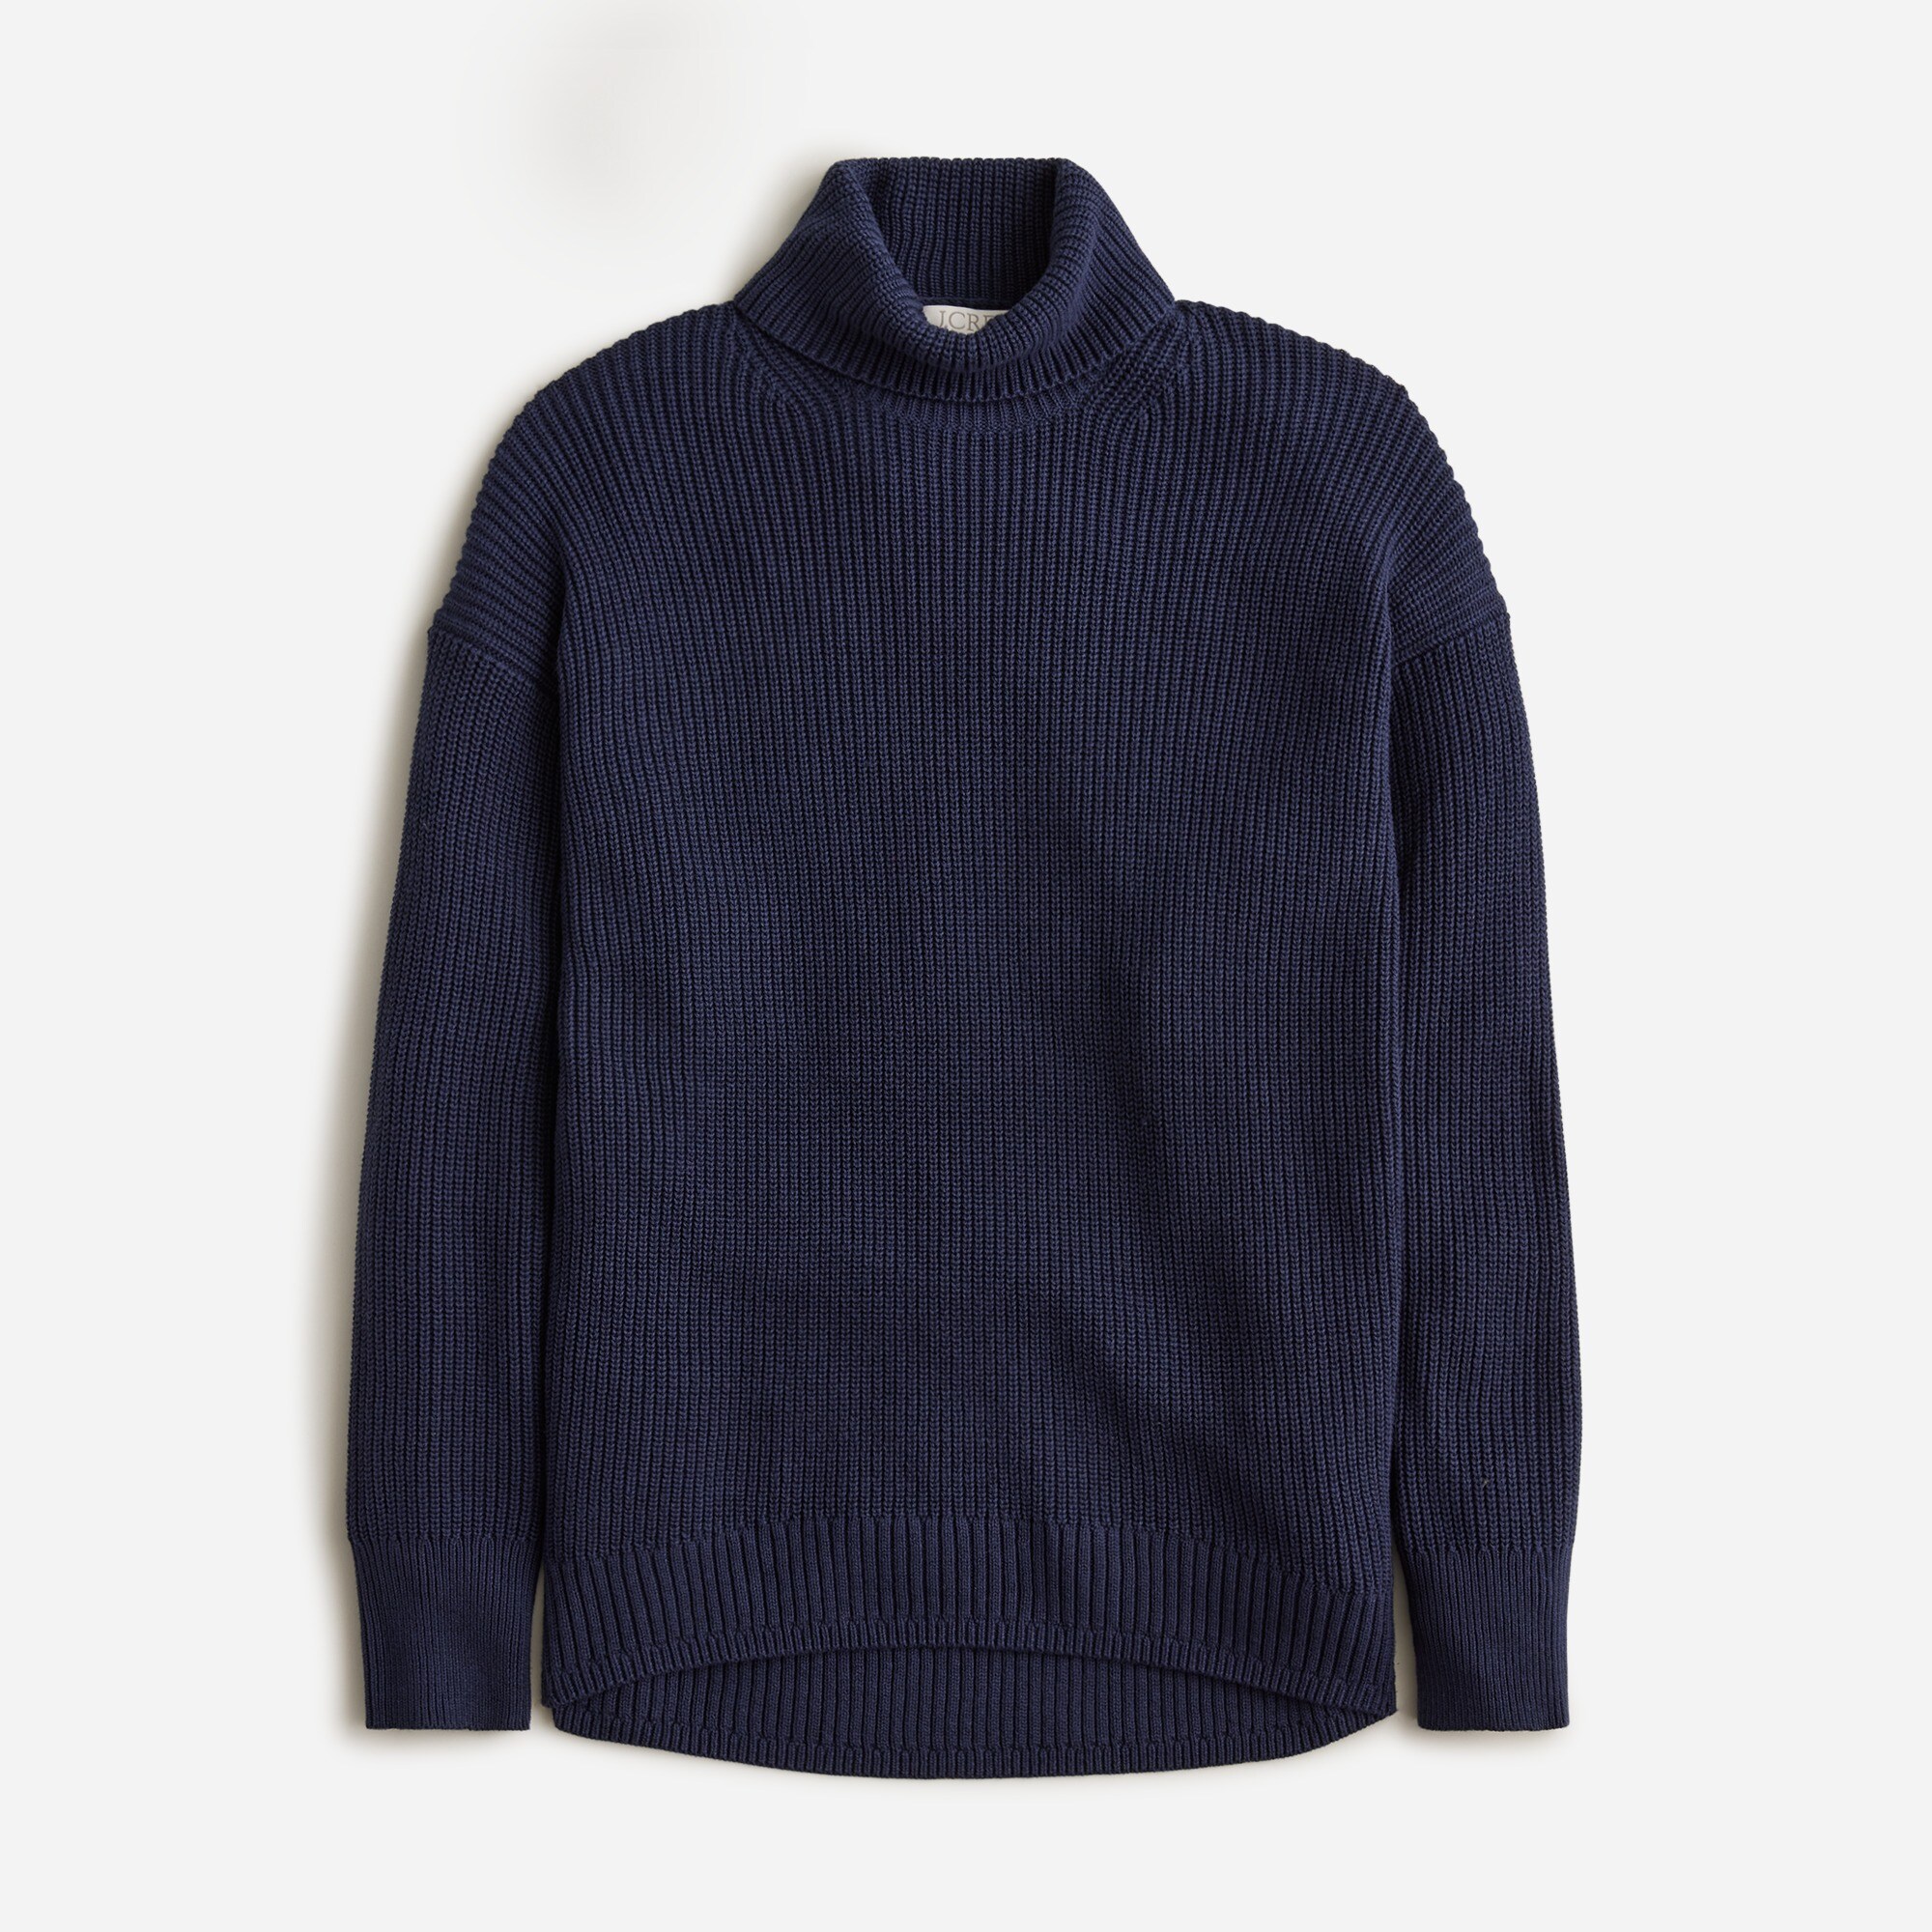  Cotton-blend ribbed turtleneck sweater